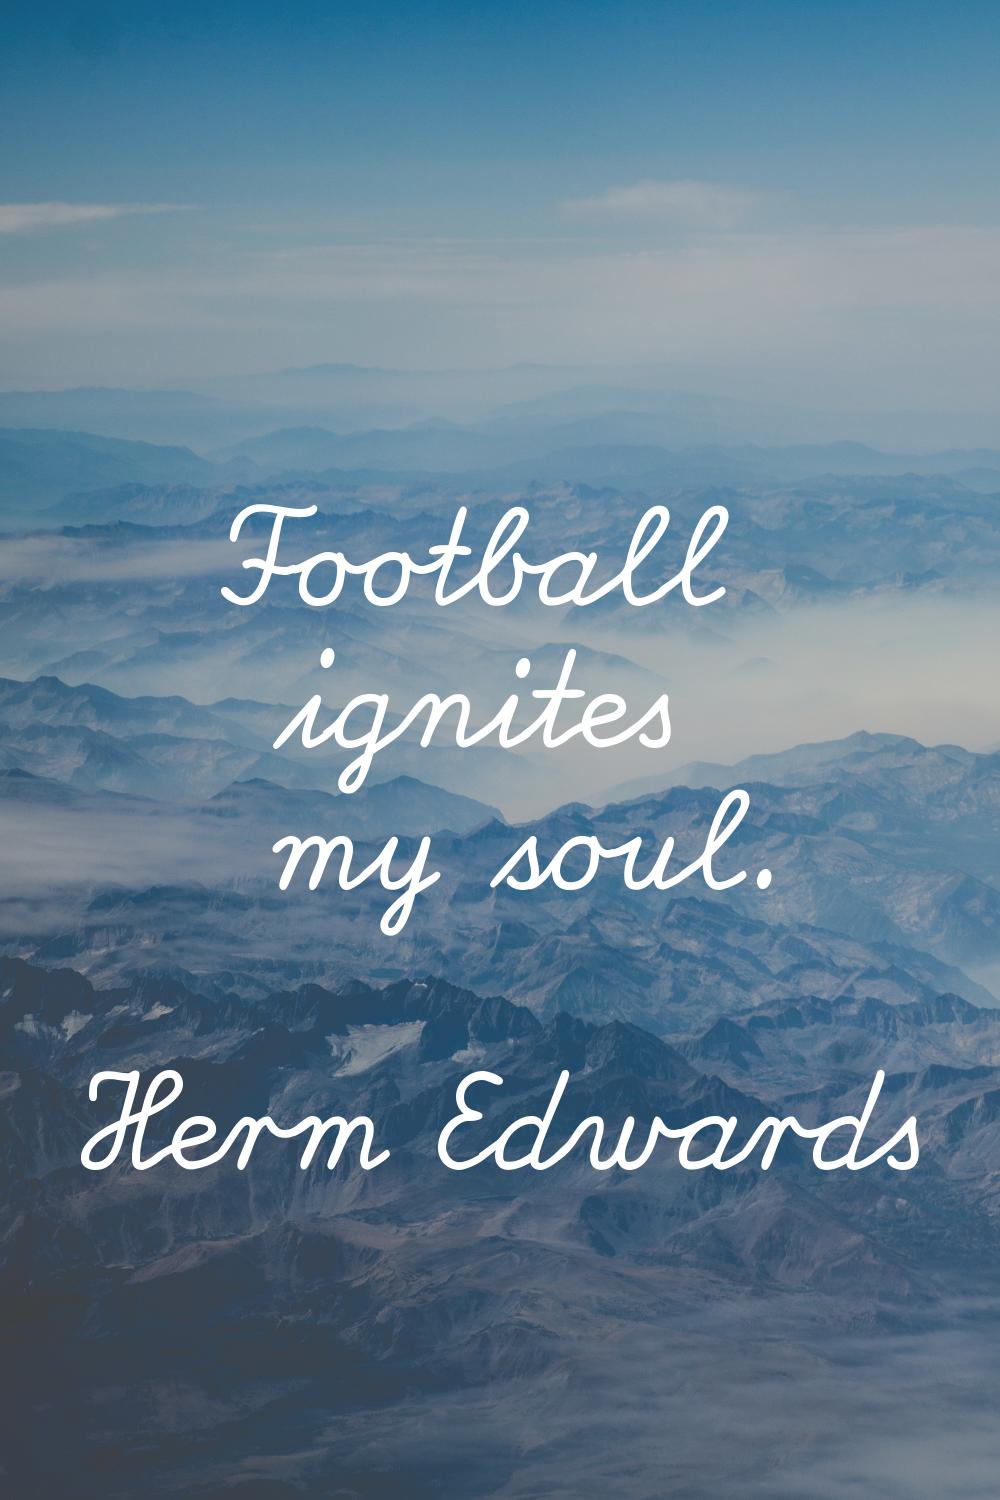 Football ignites my soul.